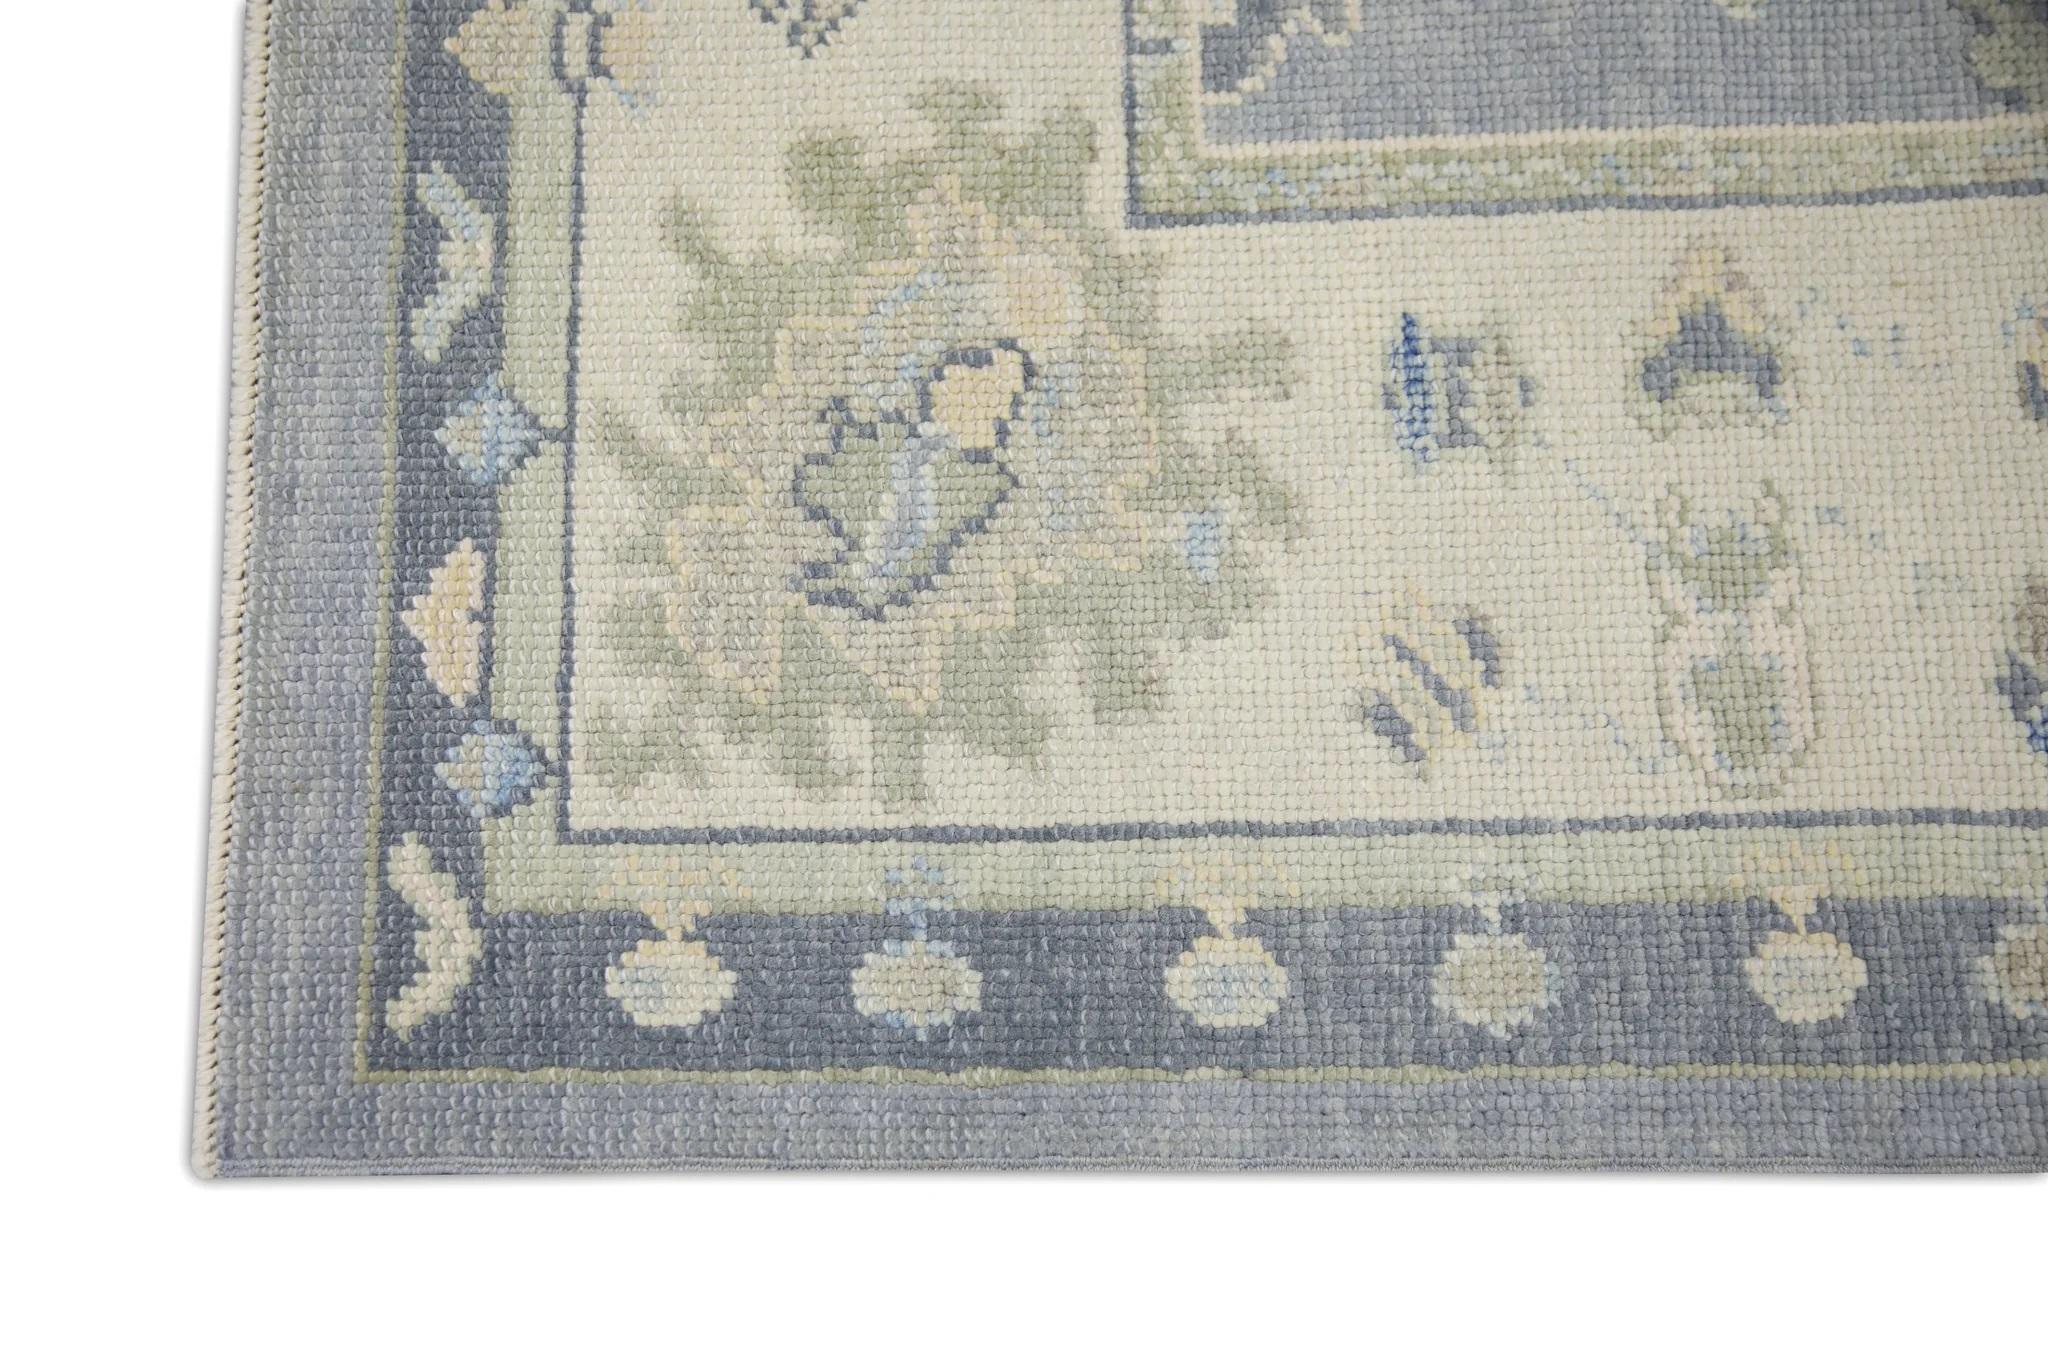 Handwoven Wool Floral Design Turkish Oushak Rug in Periwinkle Blue 5'11